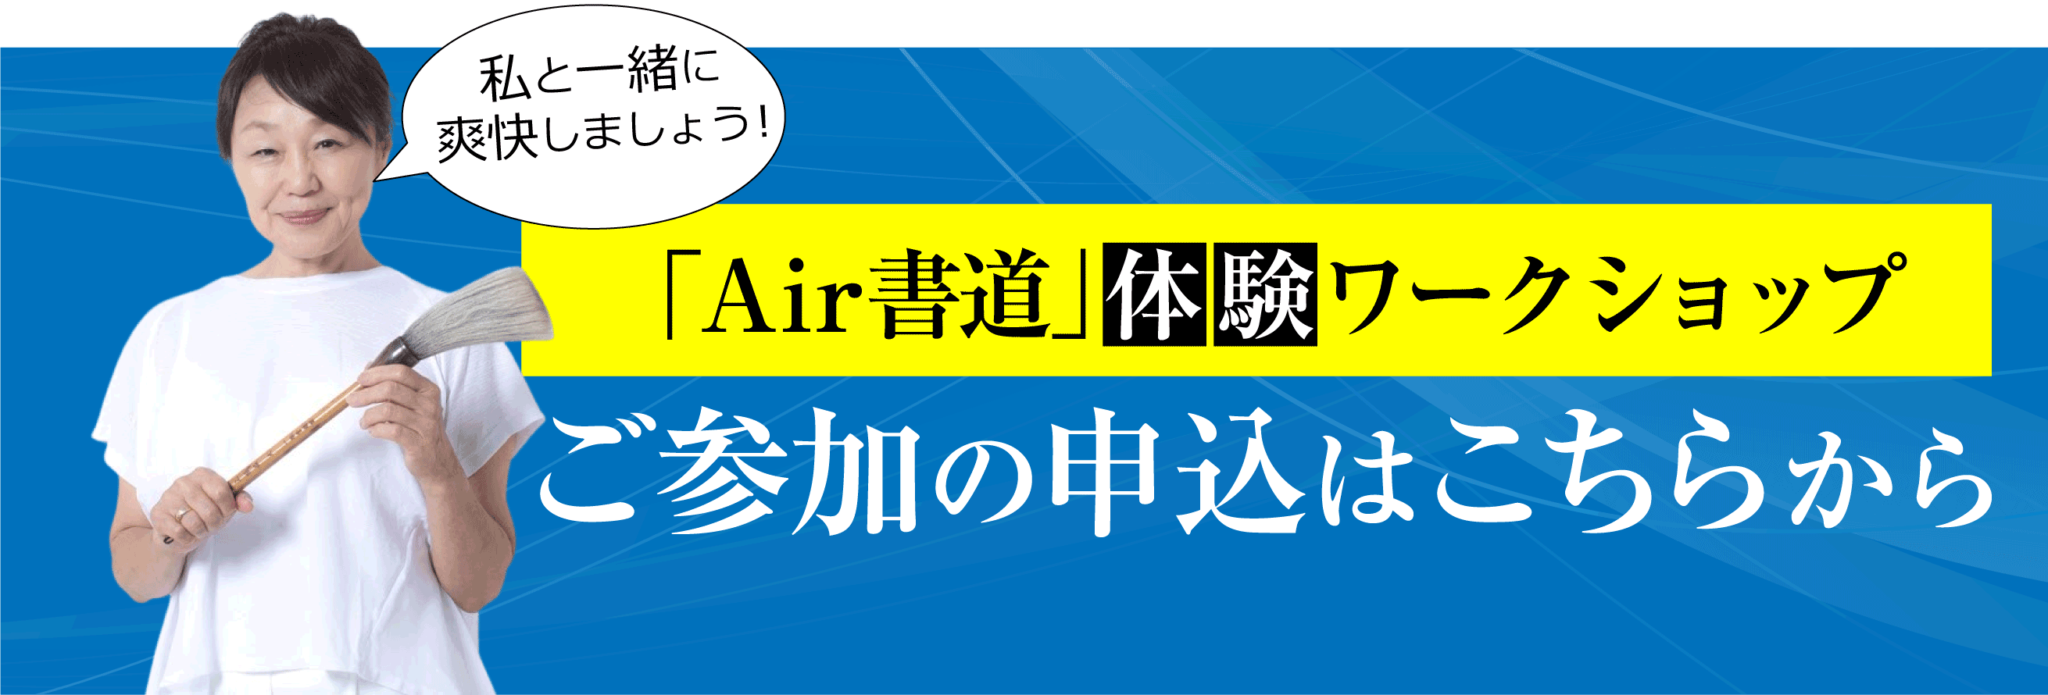 Air書道 体験会 LINE公式アカウント